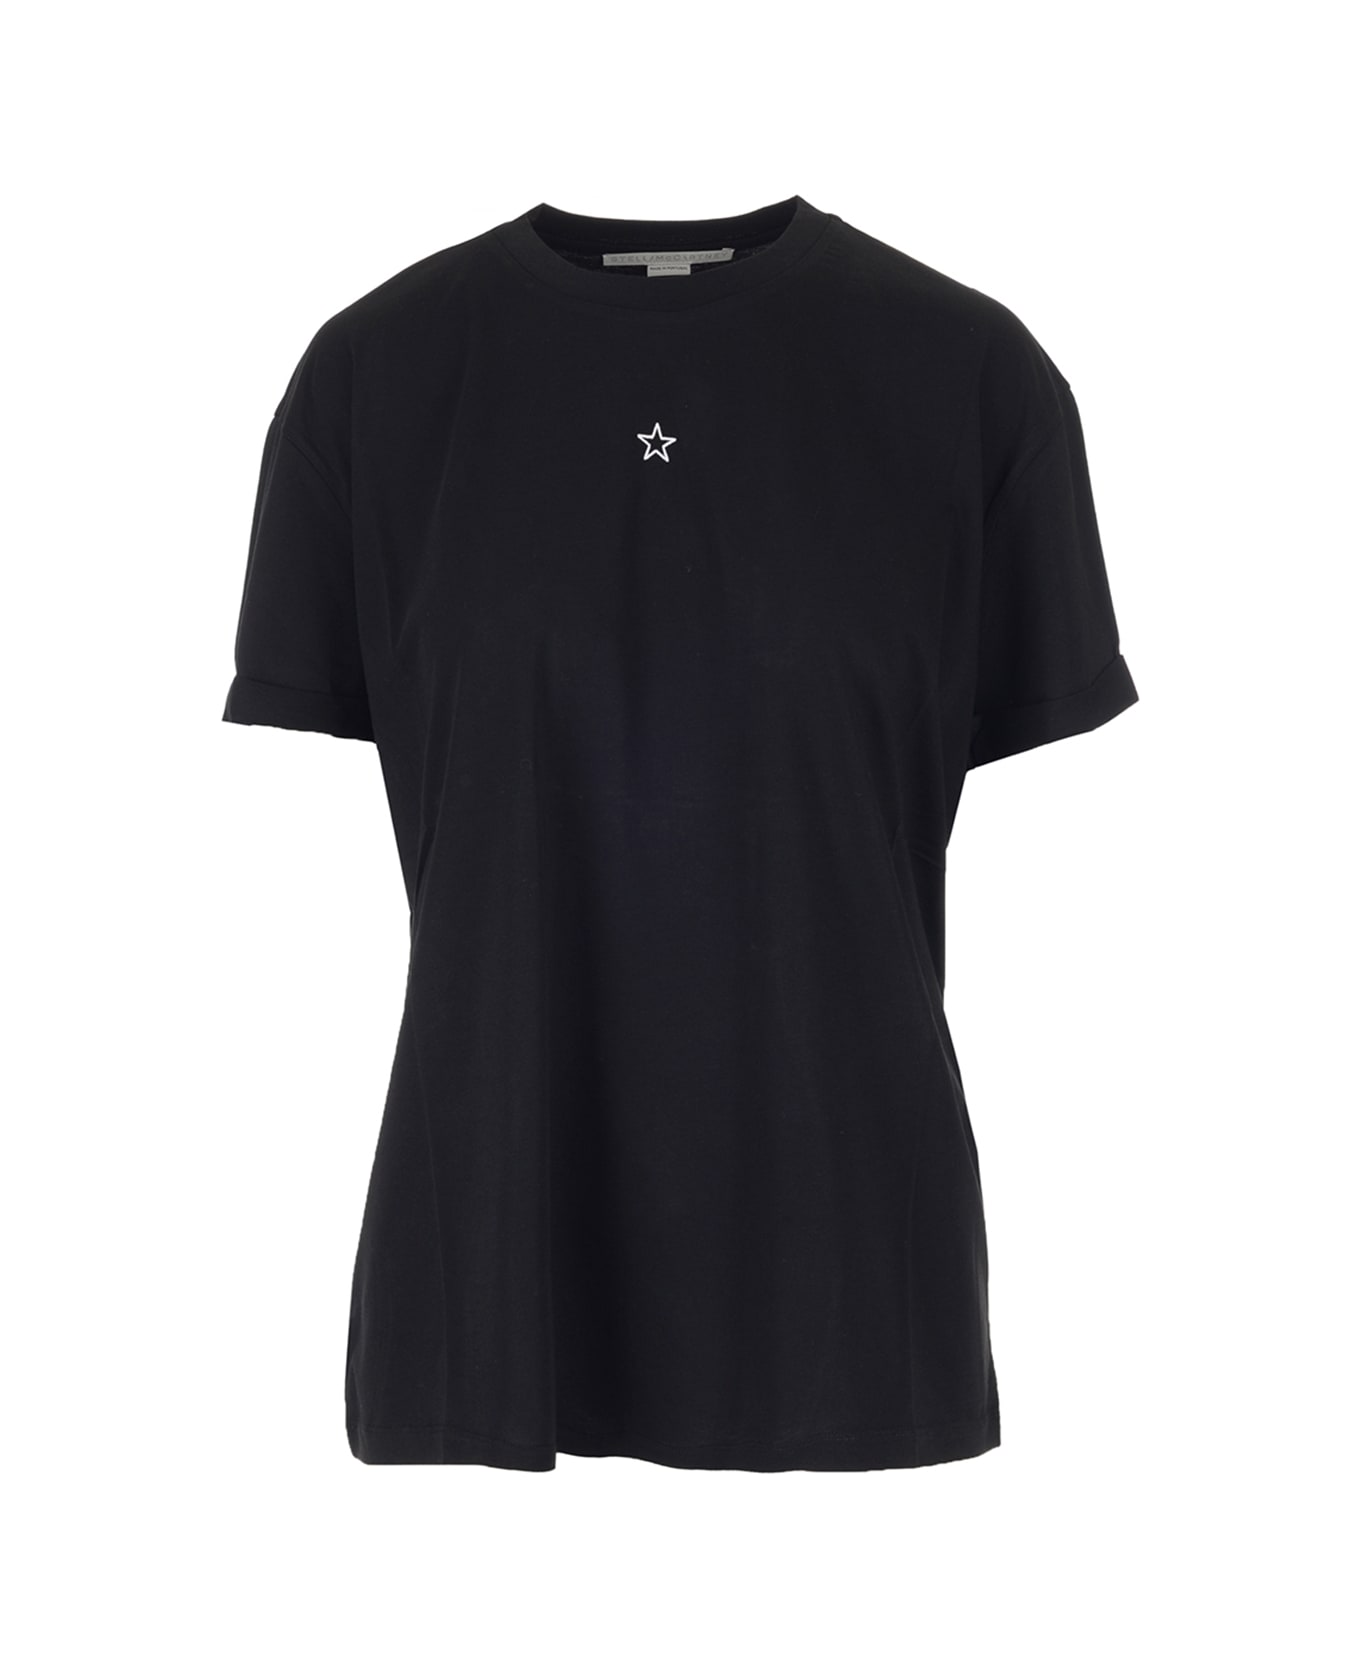 Stella McCartney Embroidered Star Detail Cotton T-shirt - black